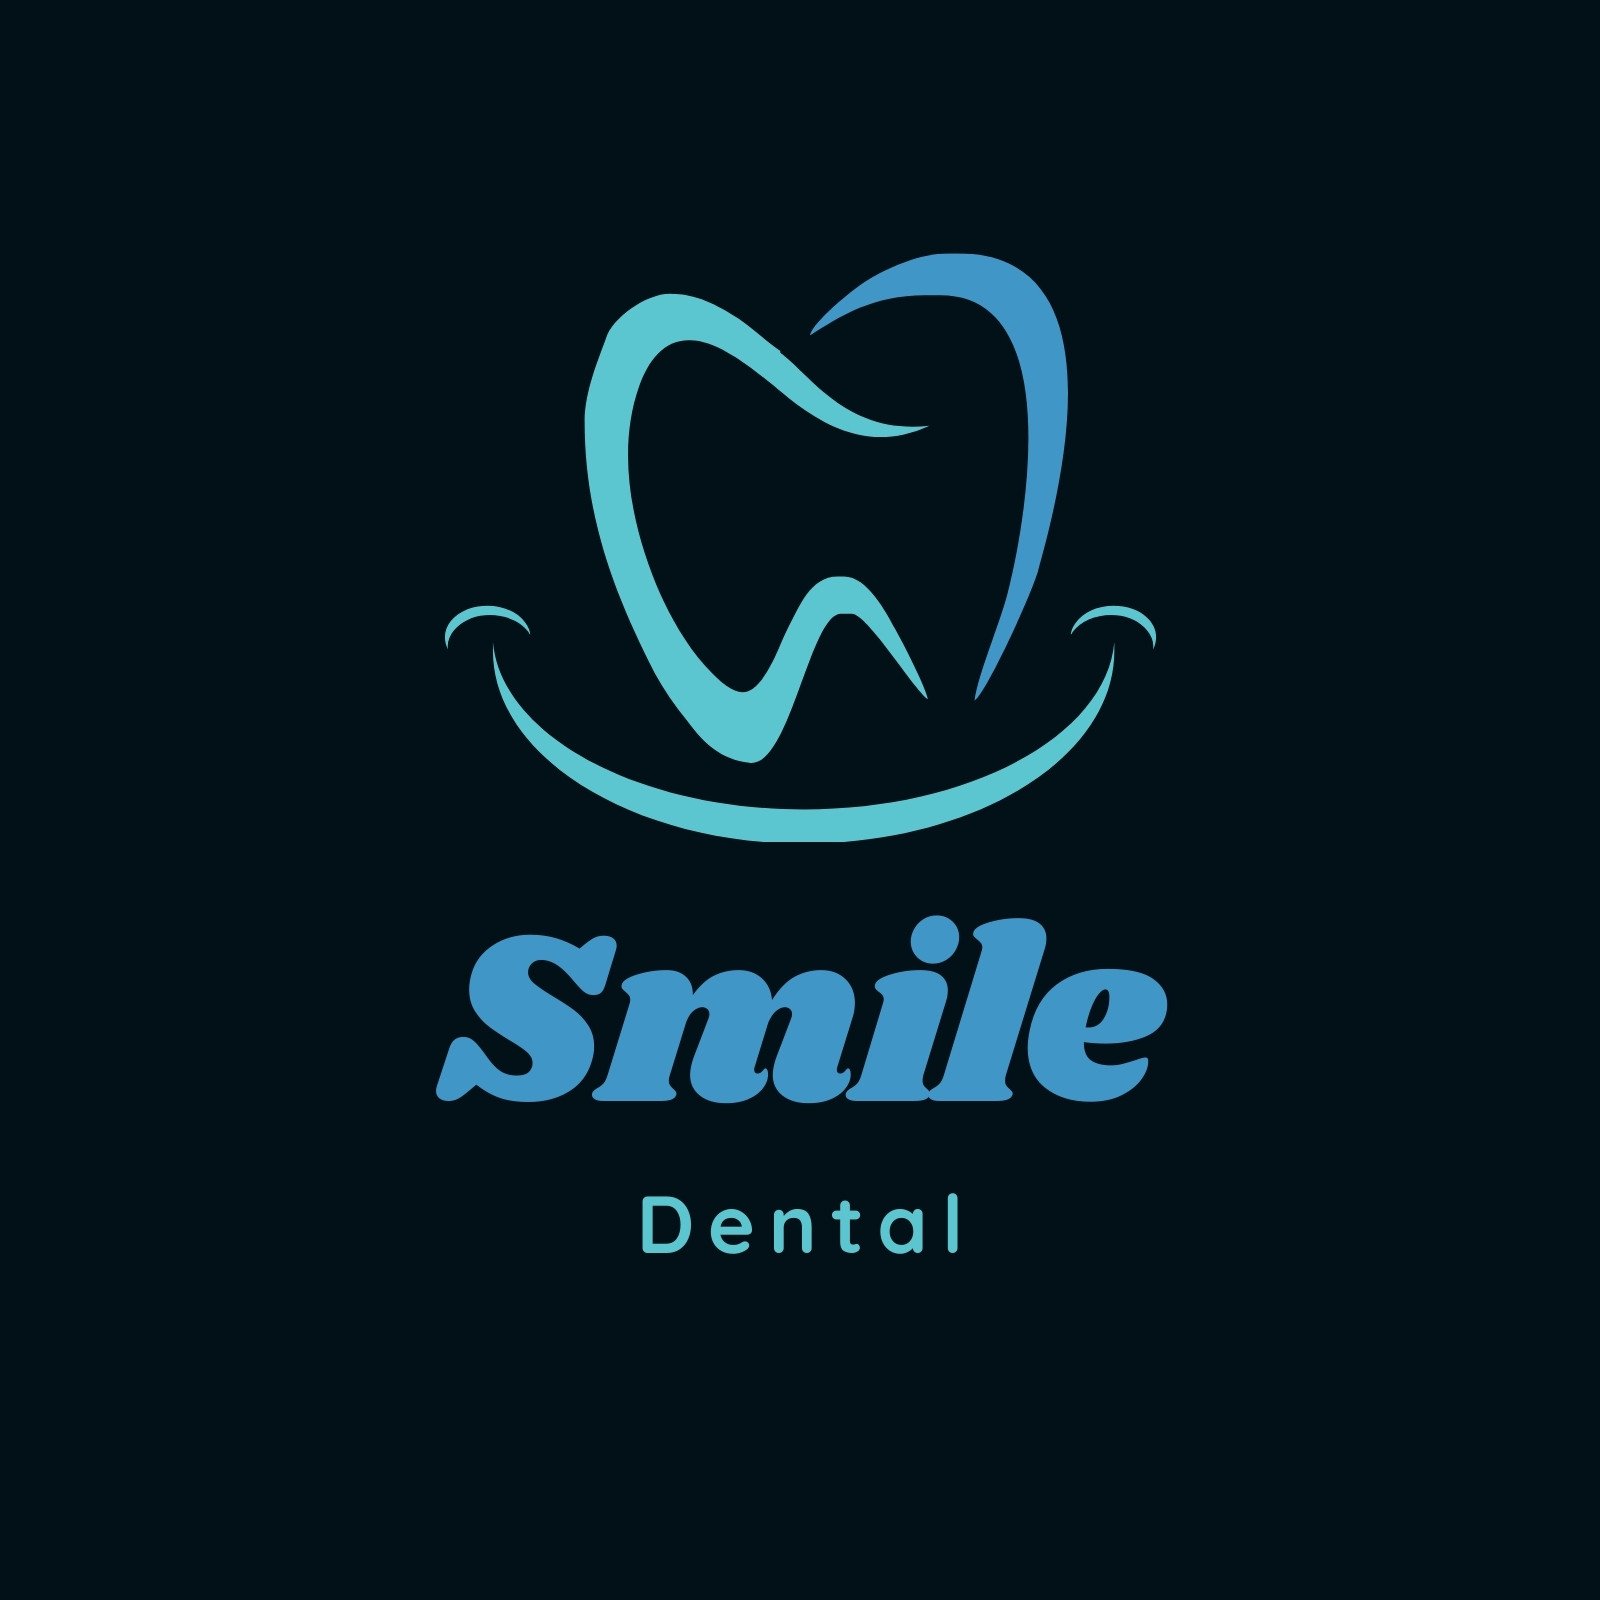 Dental Dentist Smile Vector PNG Images, Smile Dental Logo Template Vector  Illustration Icon Design, Caries, Dermatologist, Icon PNG Image For Free  Download | Dental logo, Icon design, Image icon